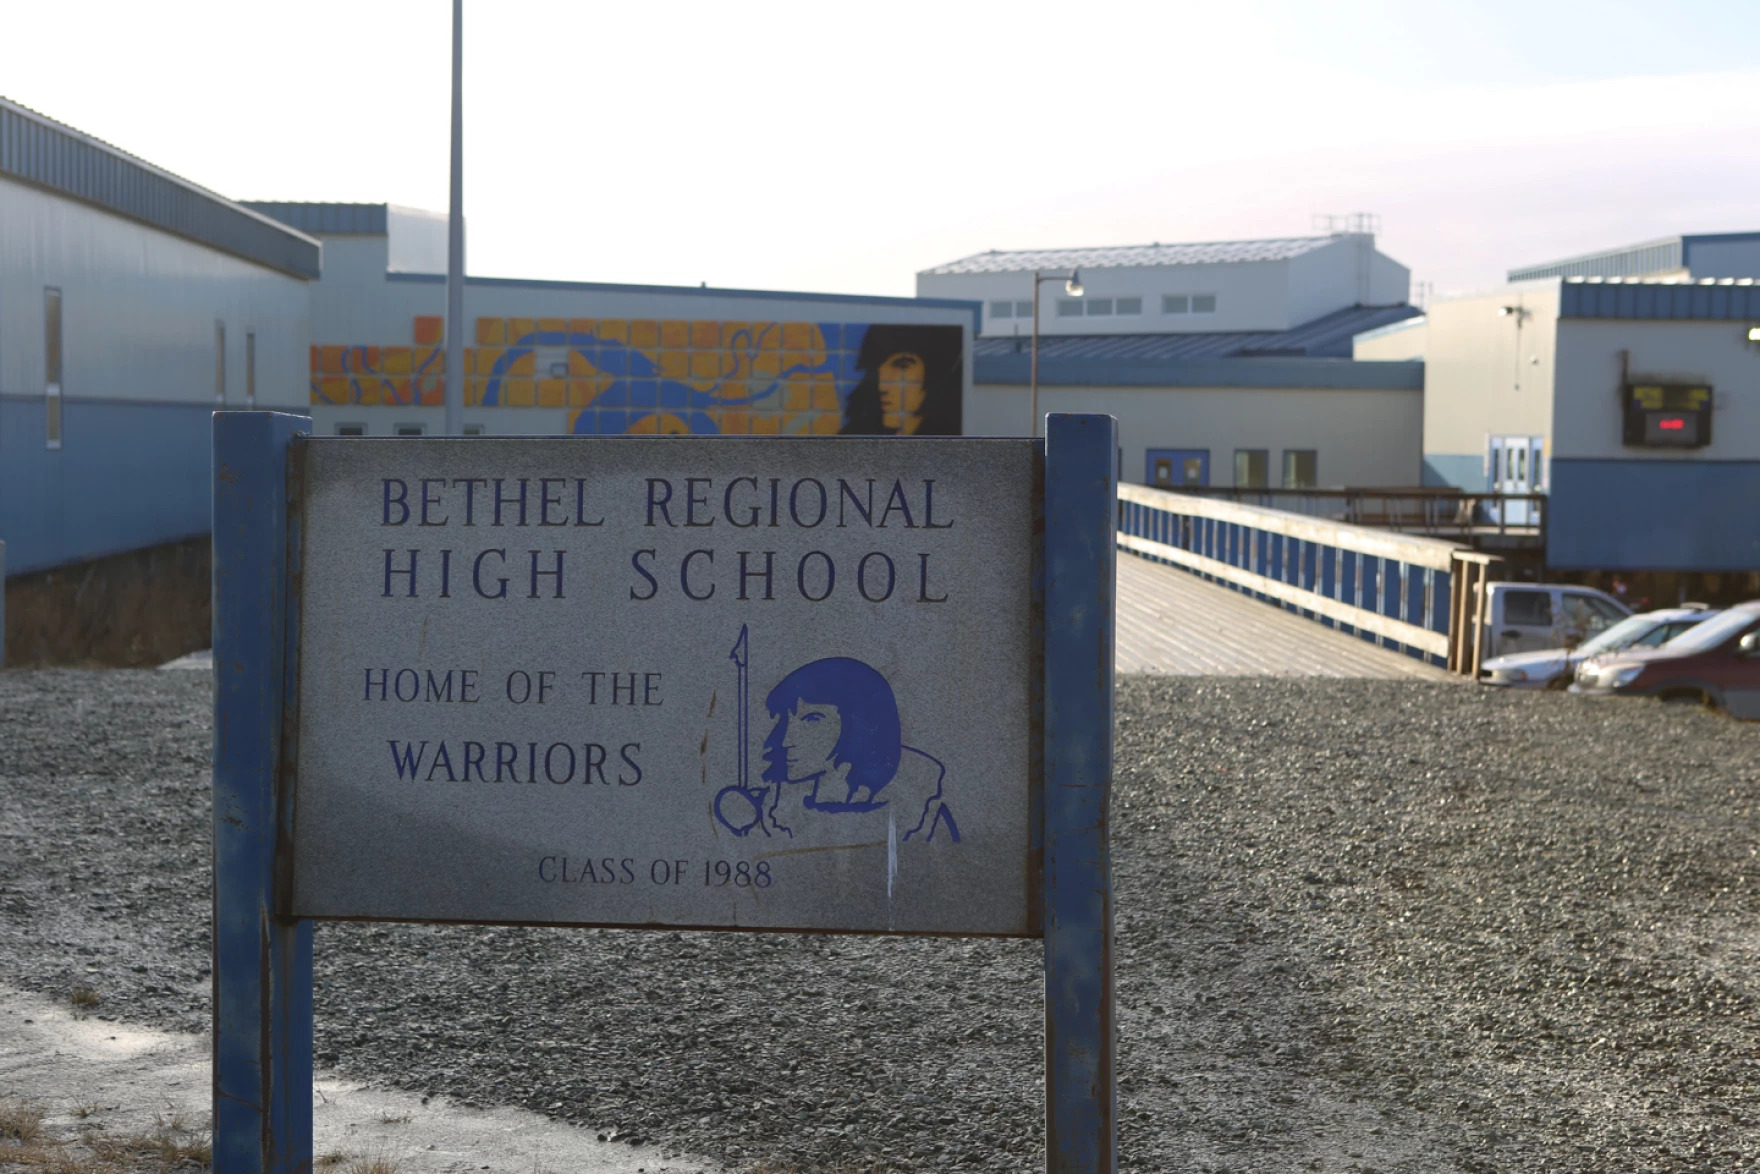 an outdoor sign says Bethel Regional High School